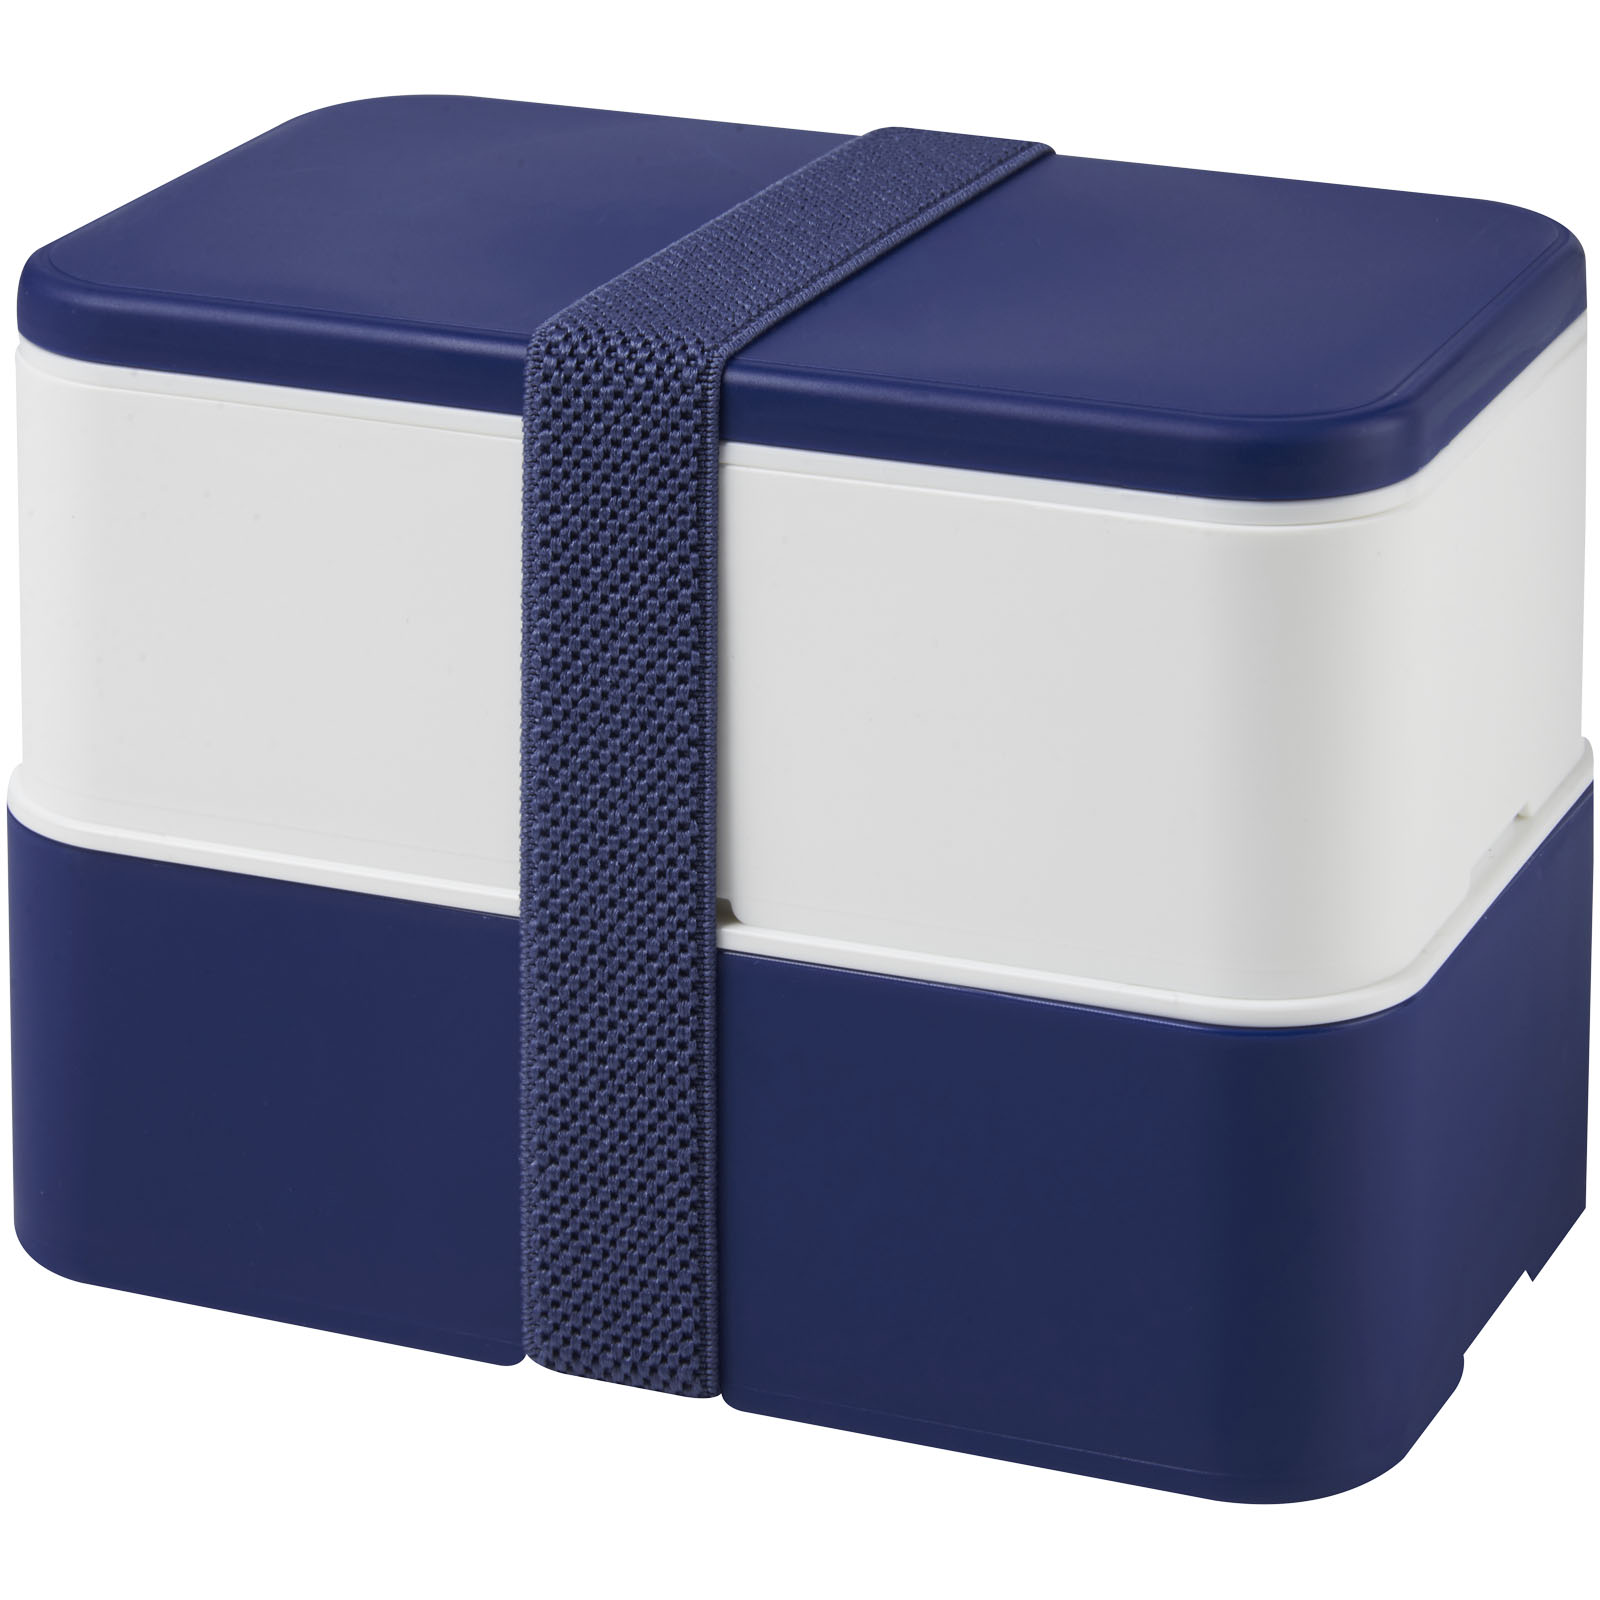 Home & Kitchen - MIYO double layer lunch box